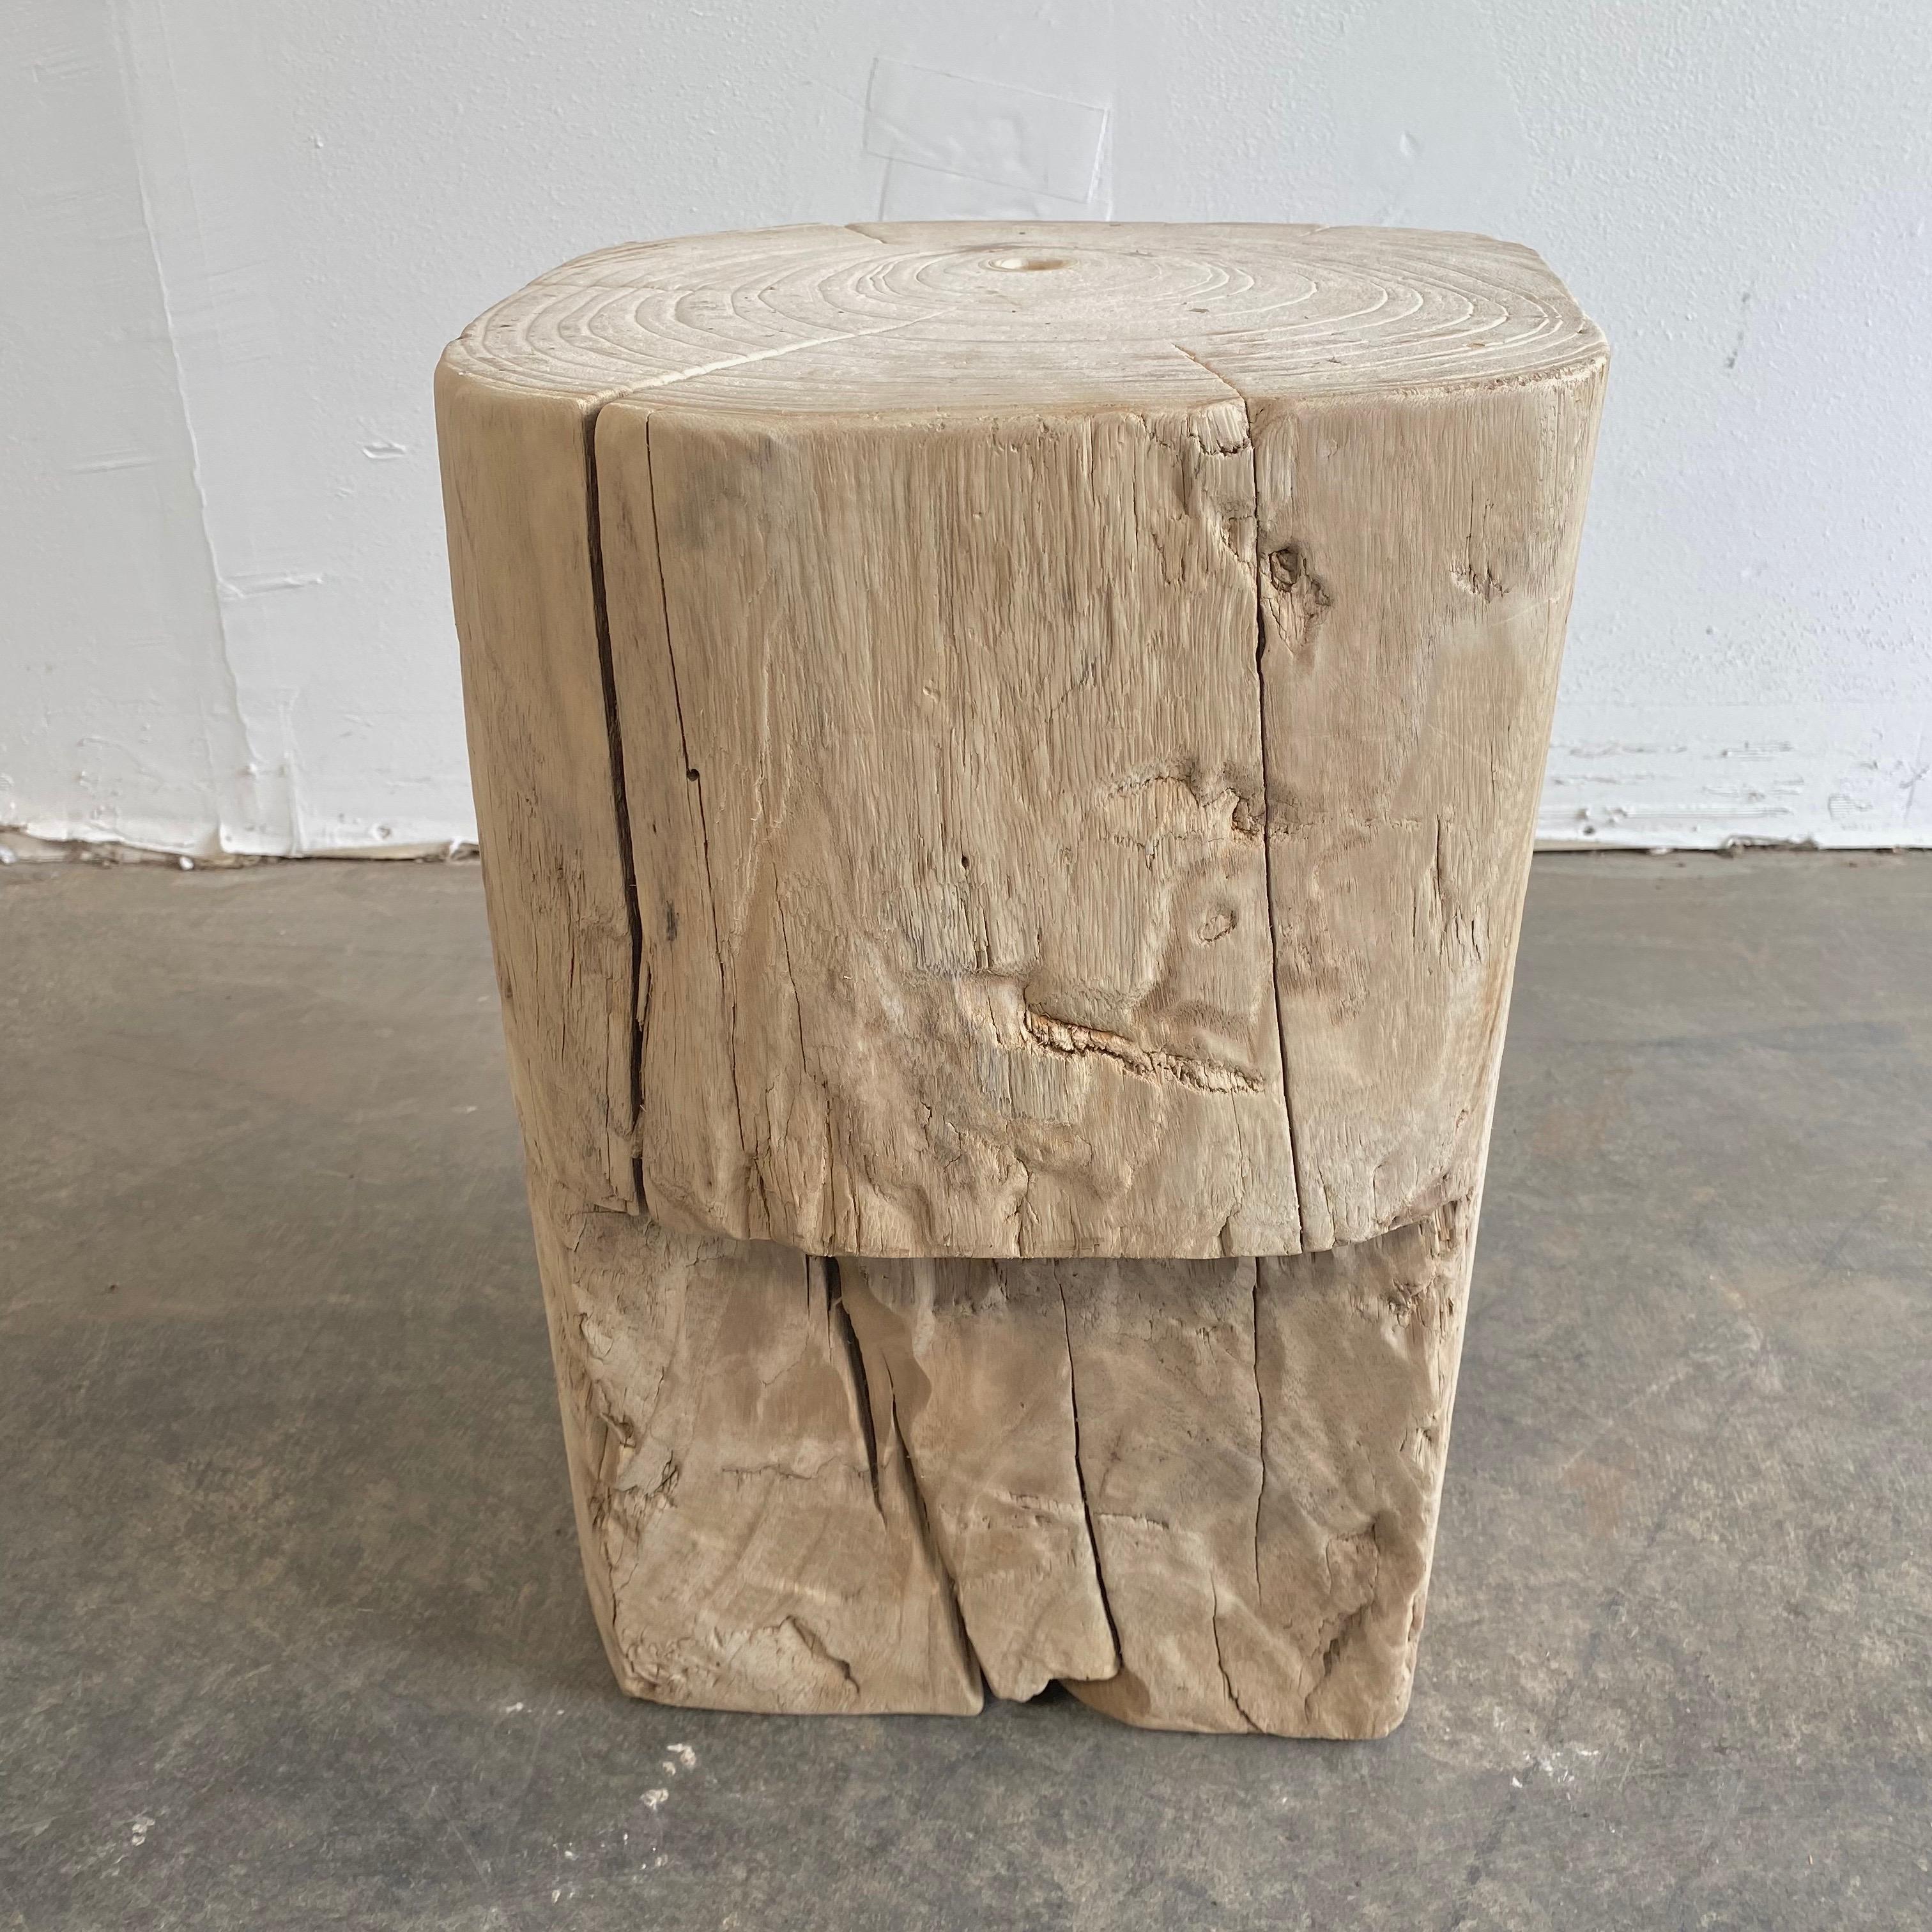 Vintage Natural Wood Stump side table
Size: 16